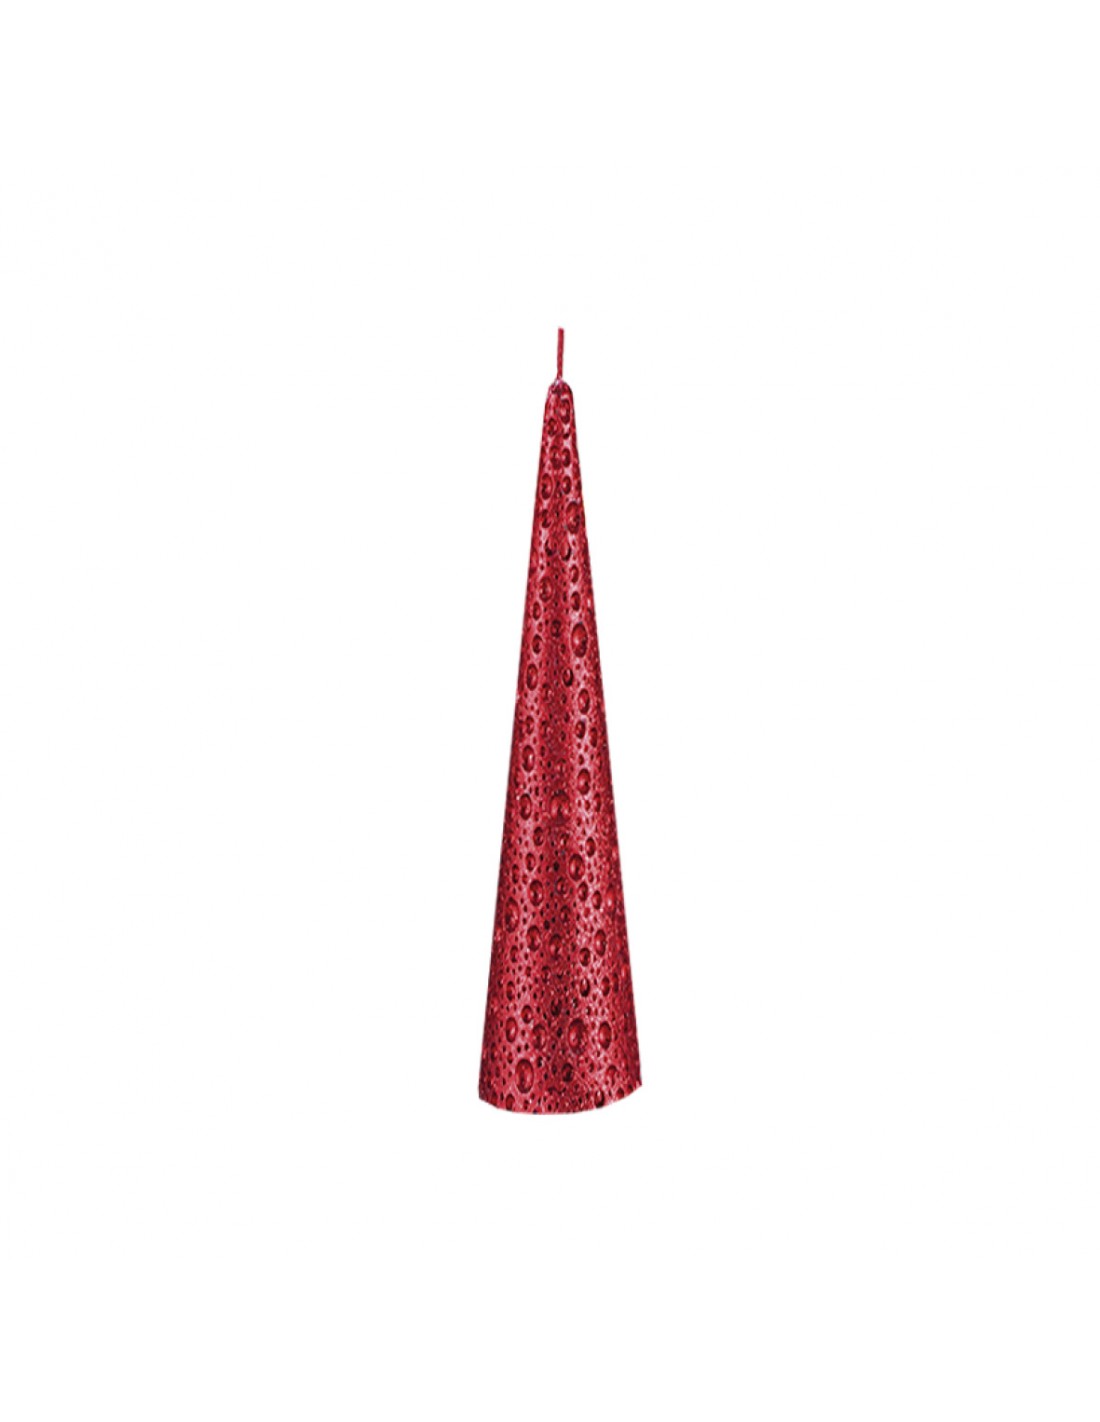 Bougie Perles rouges conique - H30 cm